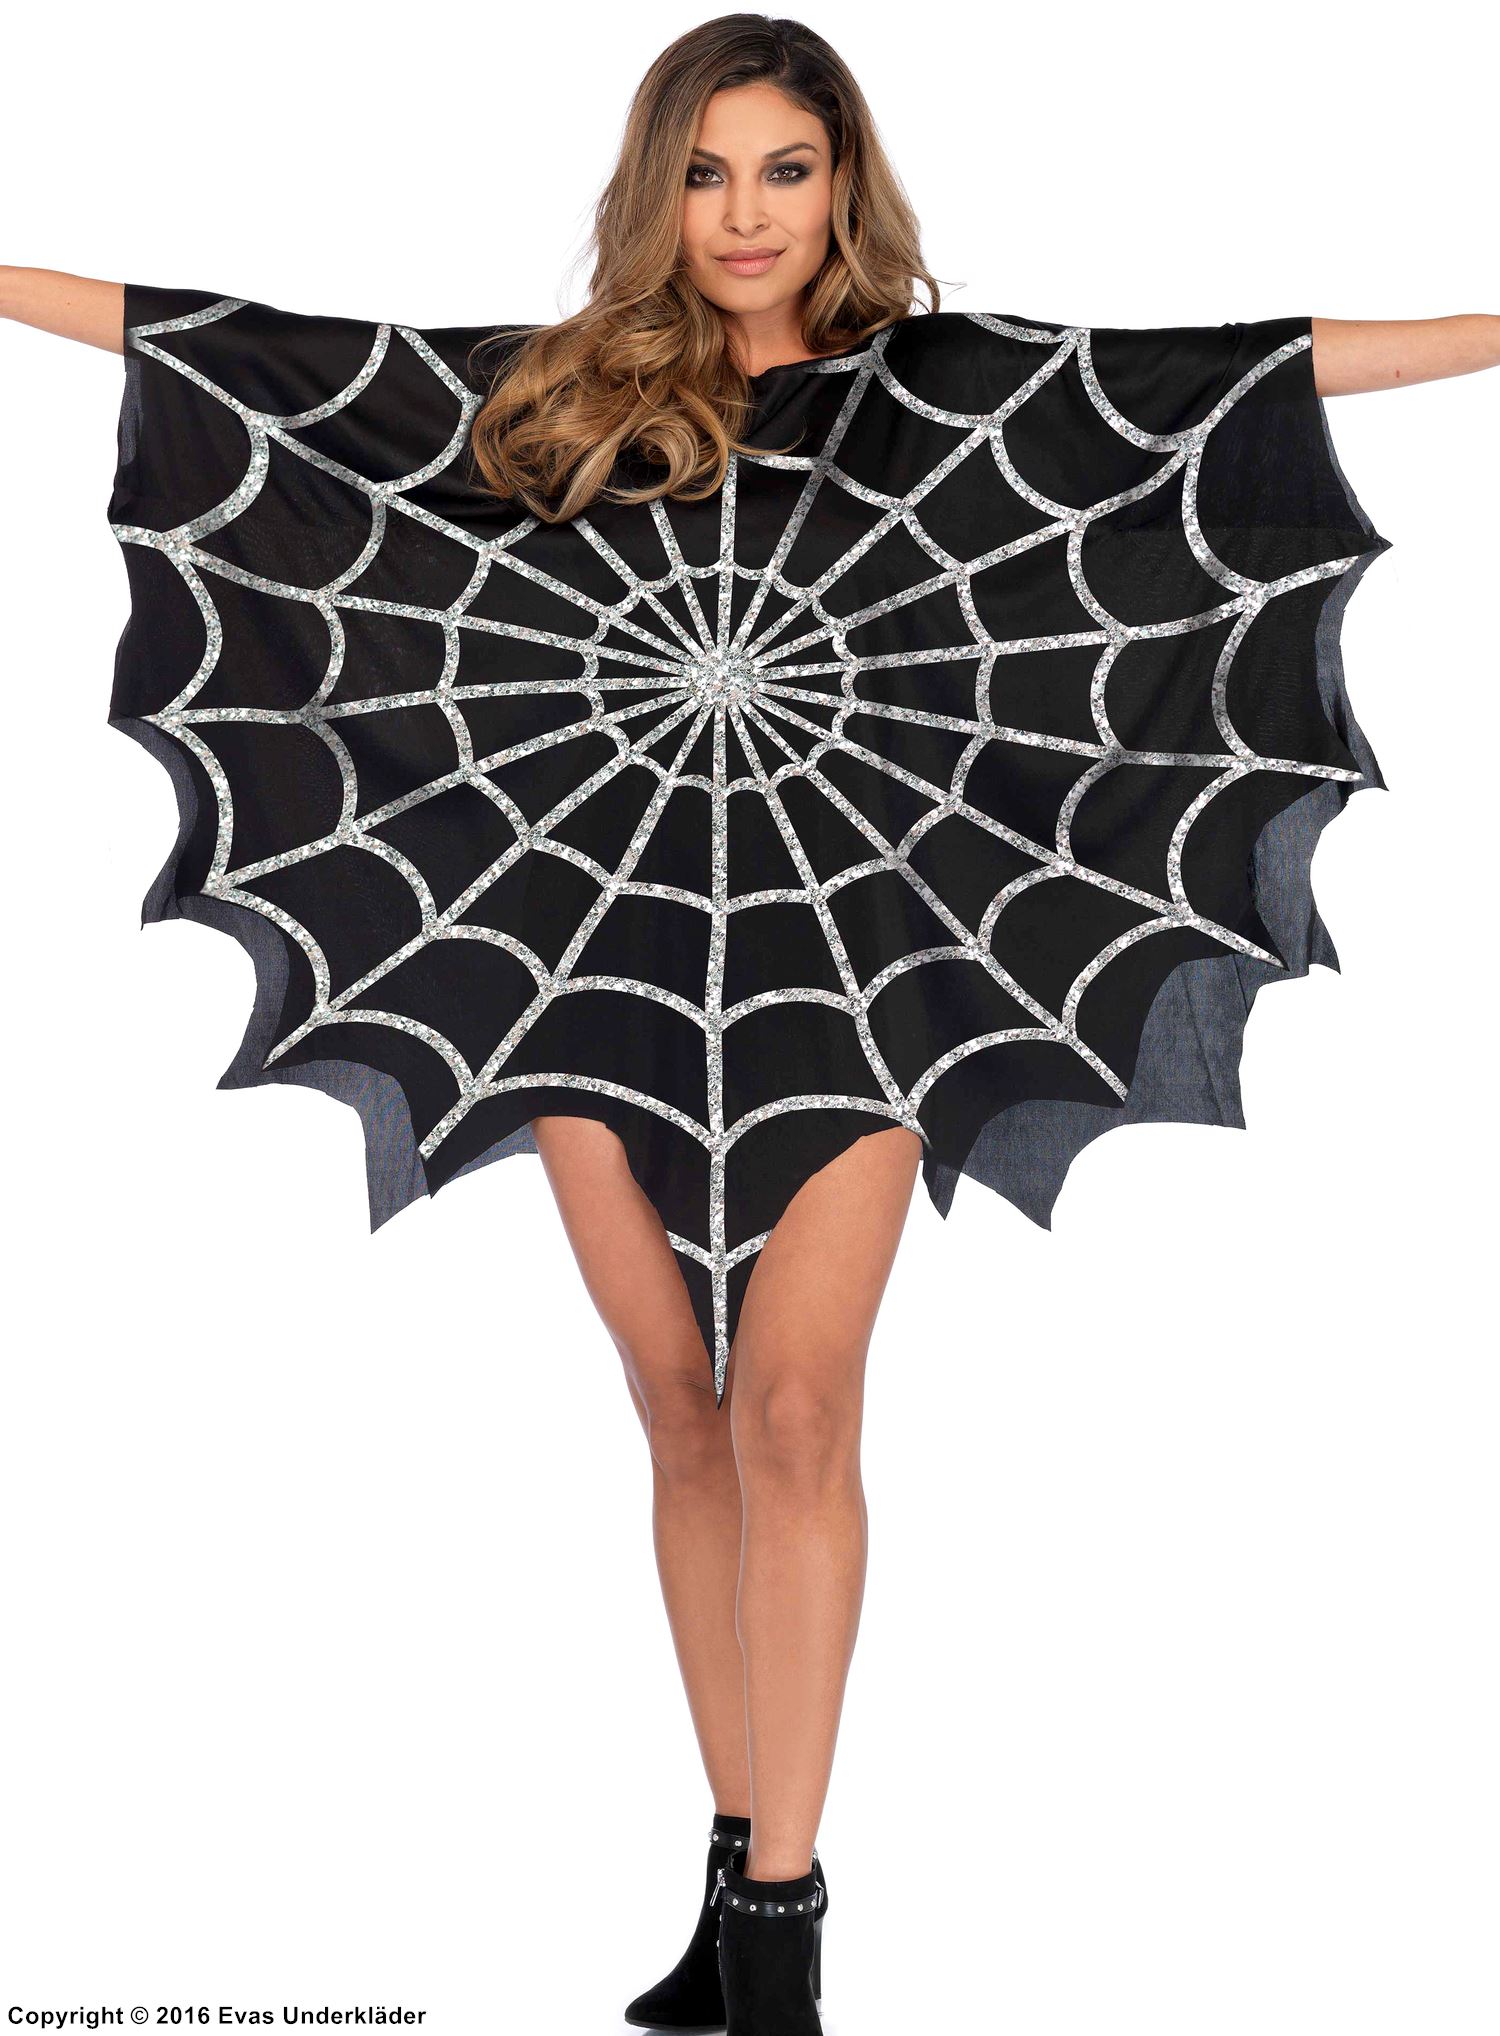 Spider (woman), costume top, glitter, spider web